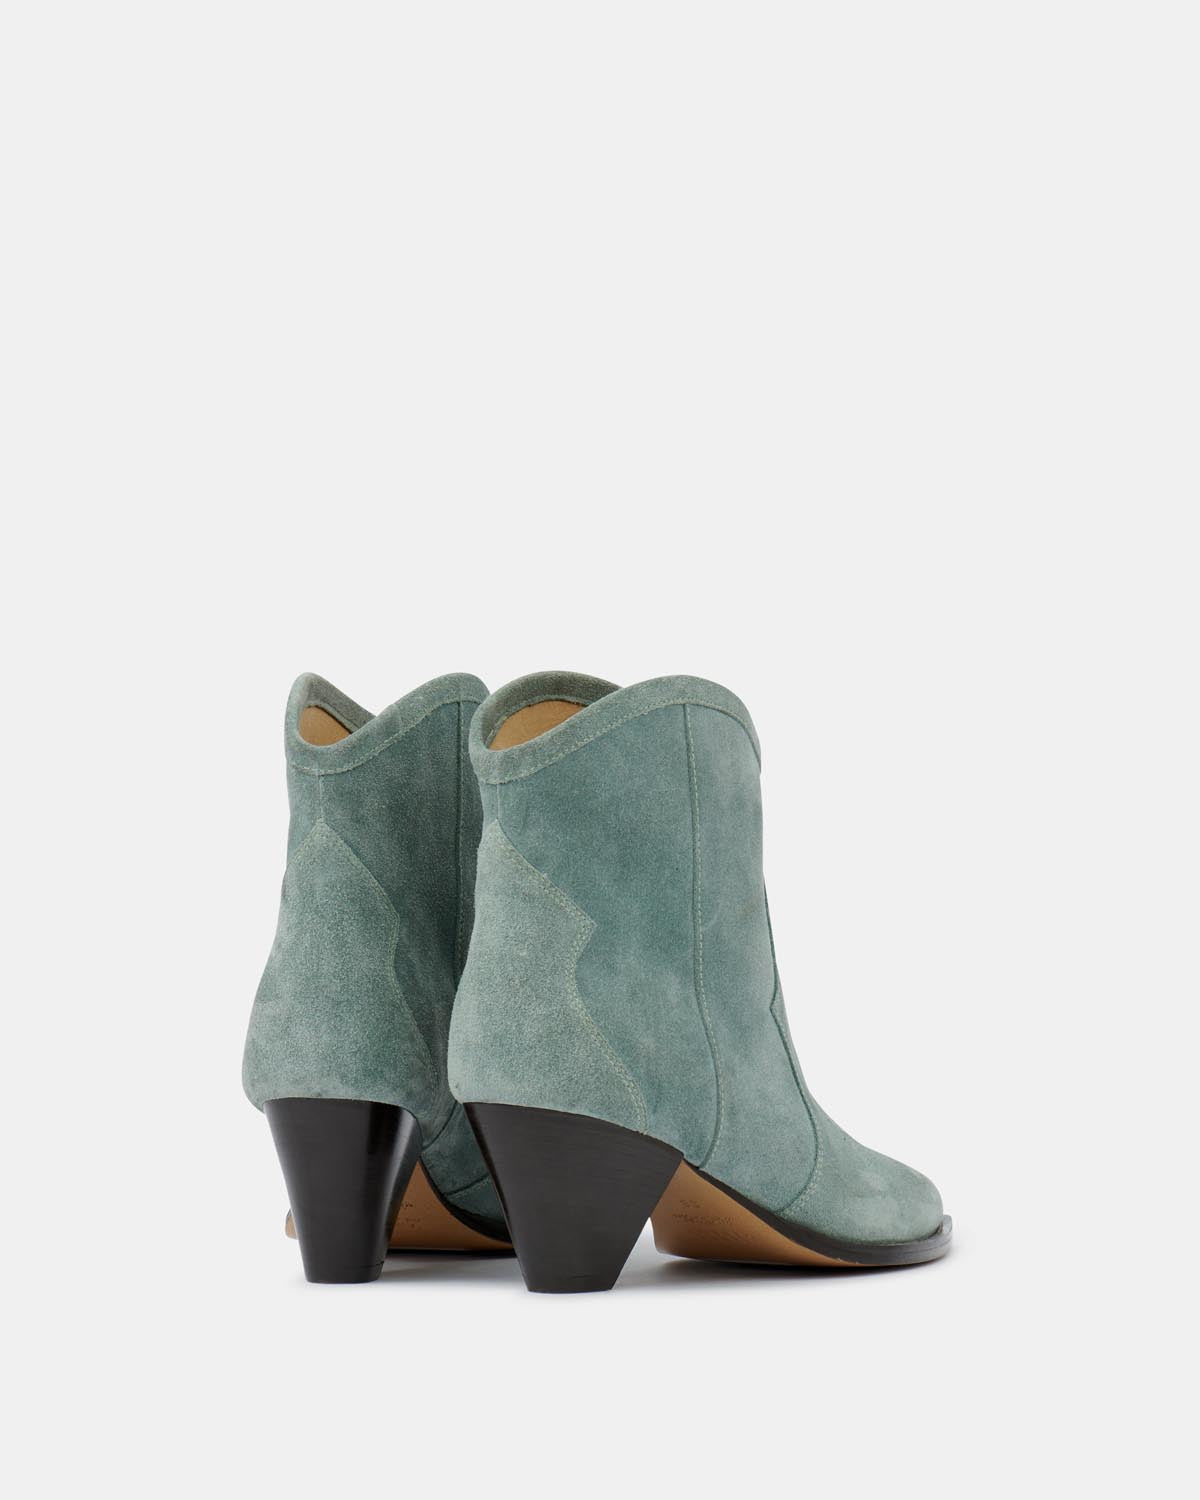 Boots darizo Woman Sea vert 2